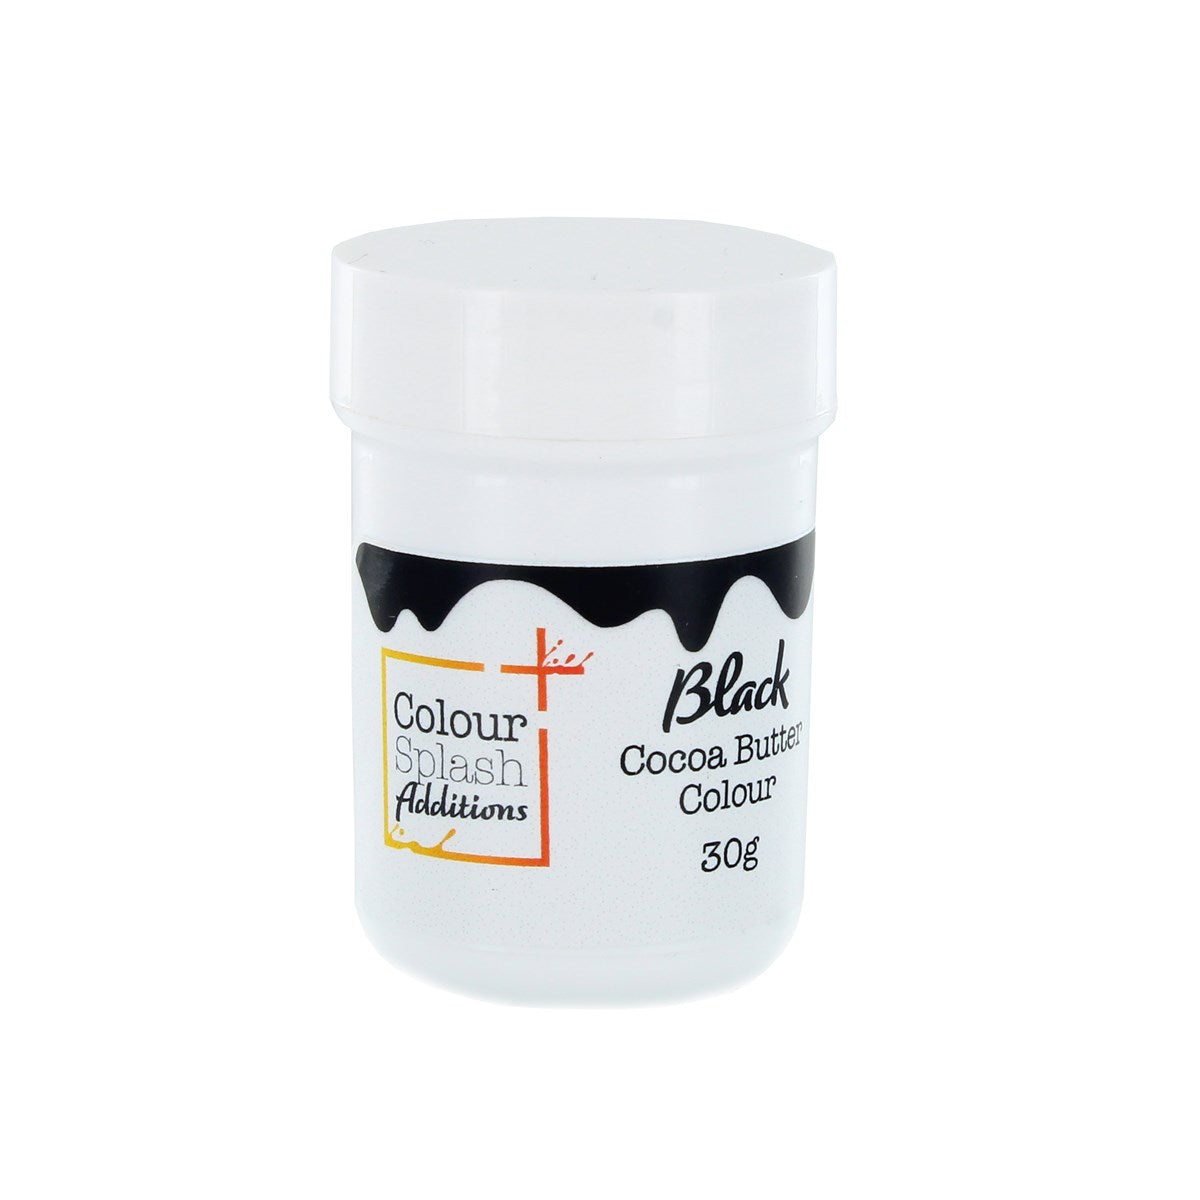 Colour Splash Additions - Cocoa Butter Edible Food Chocolate Colour - Black 30g